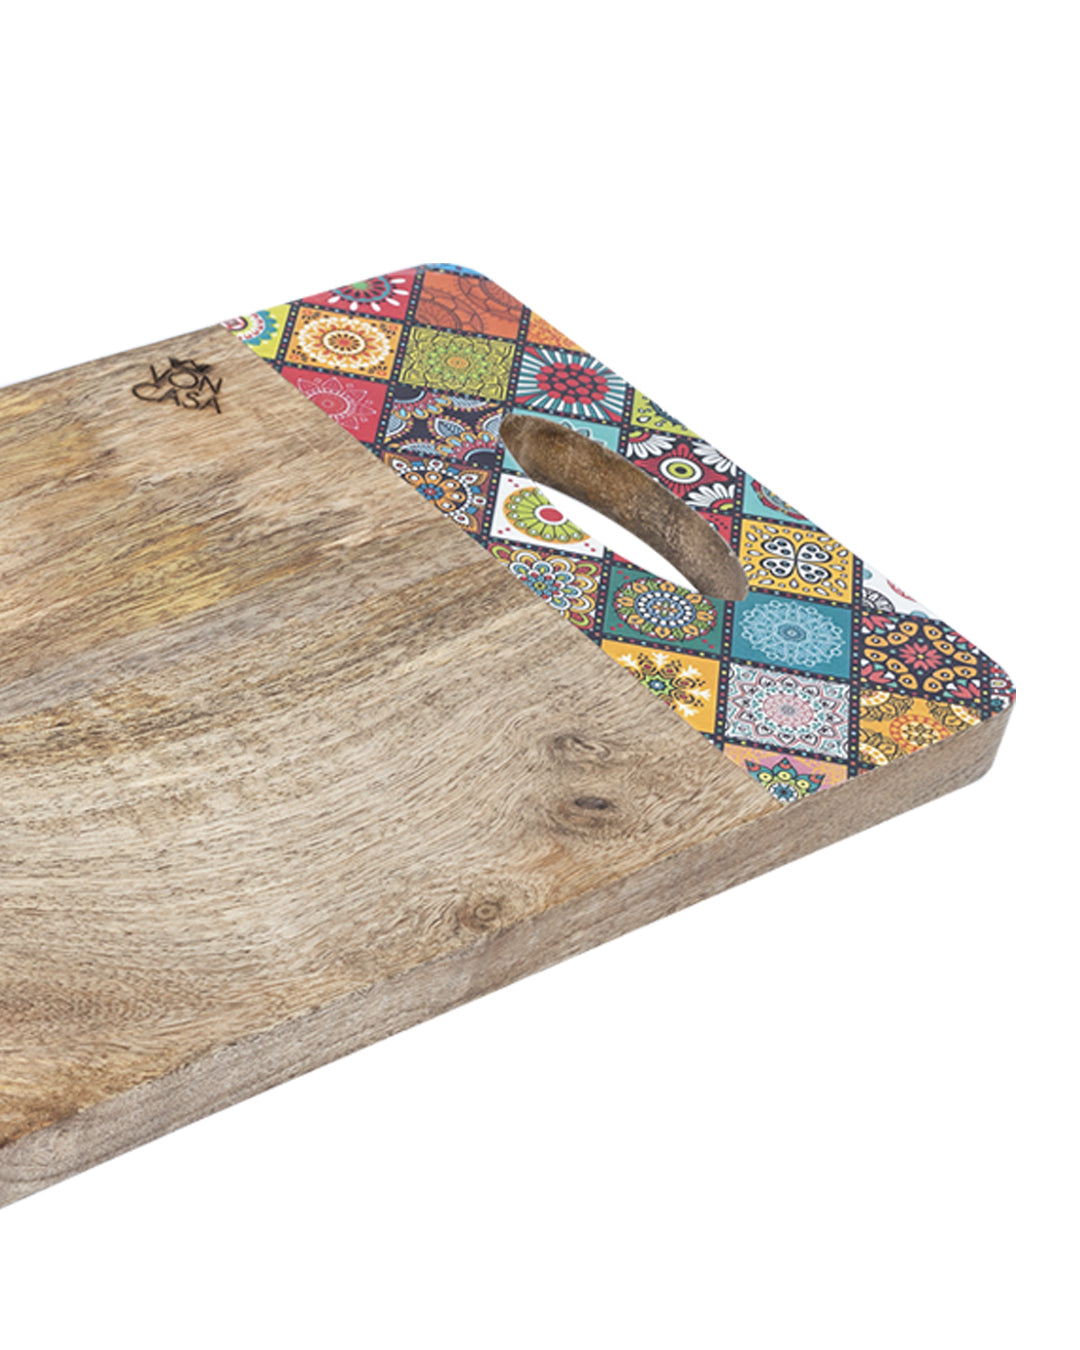 VON CASA Wooden Kitchen Cutting & Chopping Board With Printed Handle